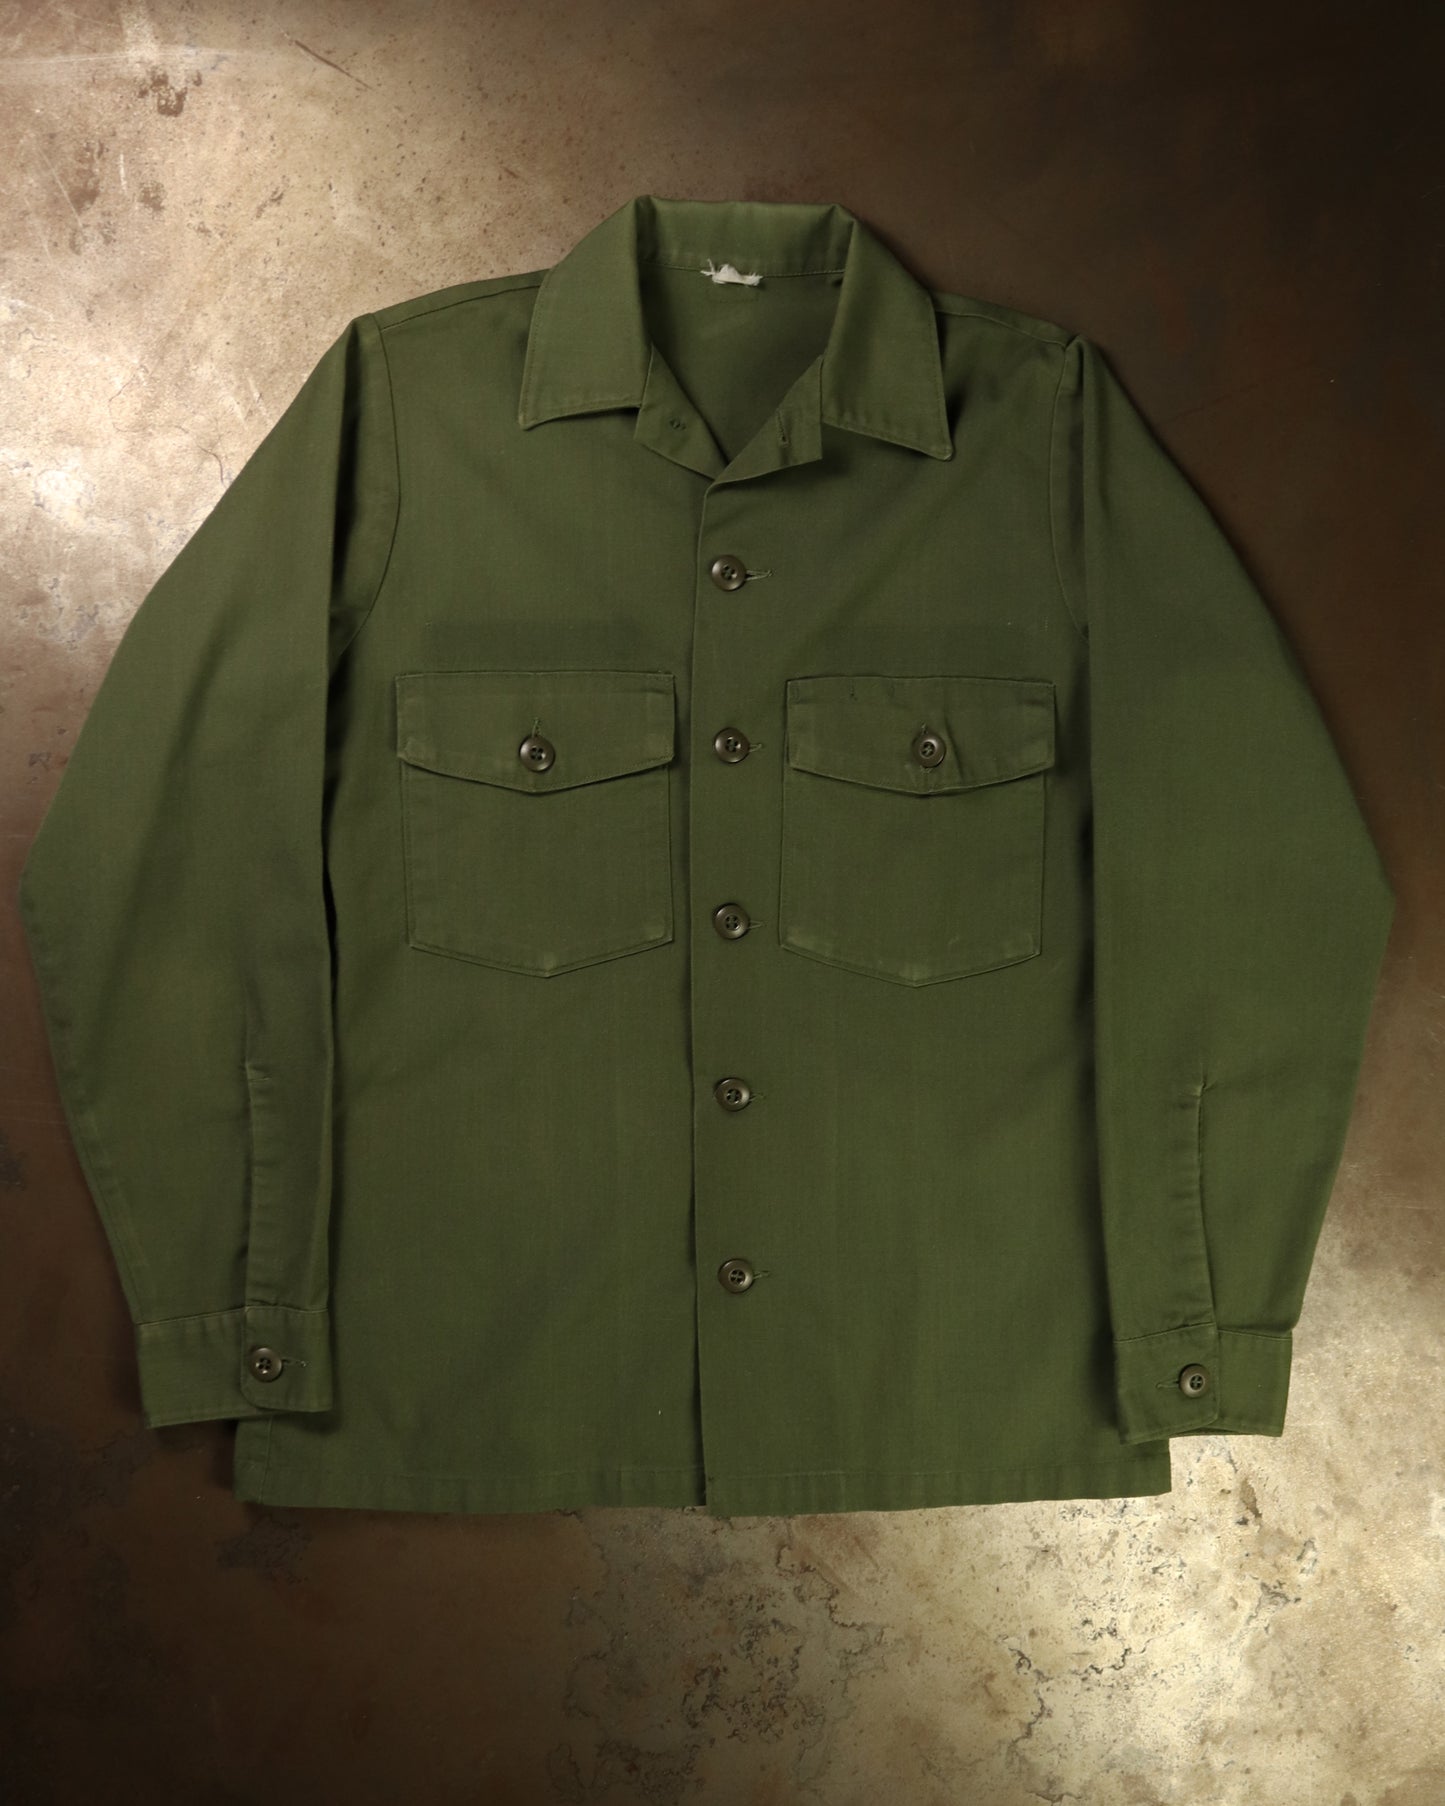 1960’s US Army OG-107 shirt